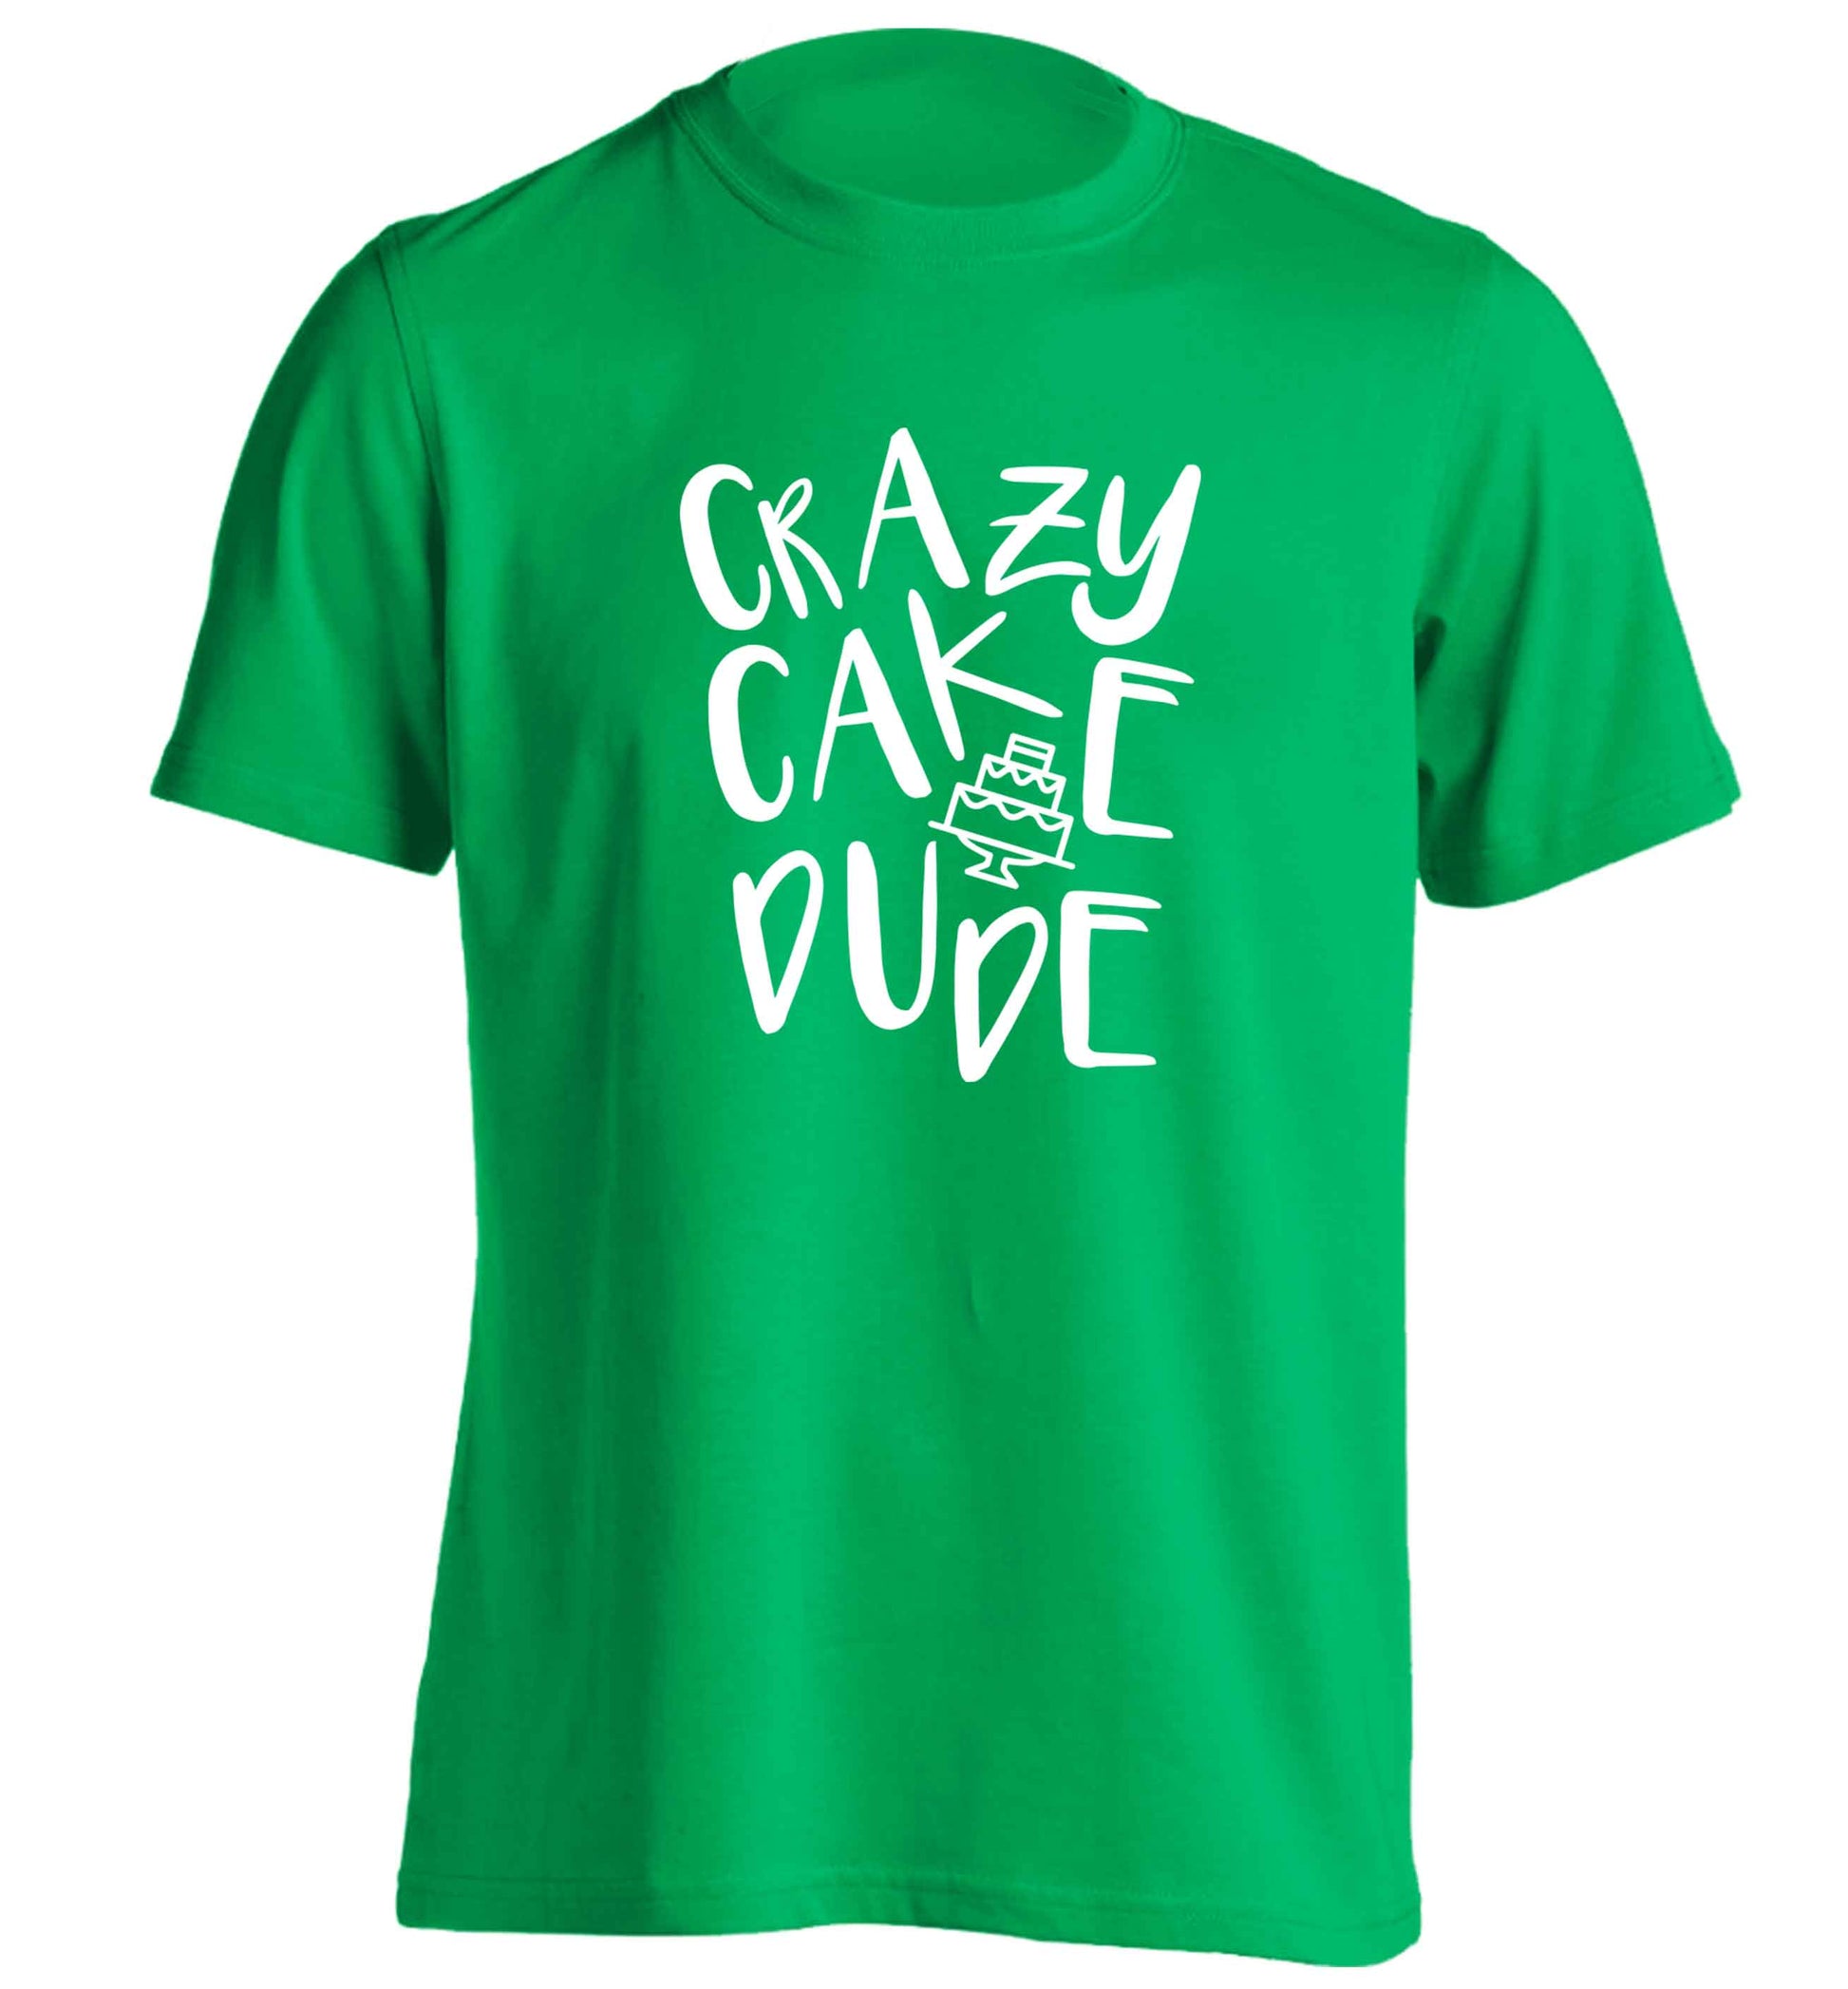 Crazy cake dude adults unisex green Tshirt 2XL